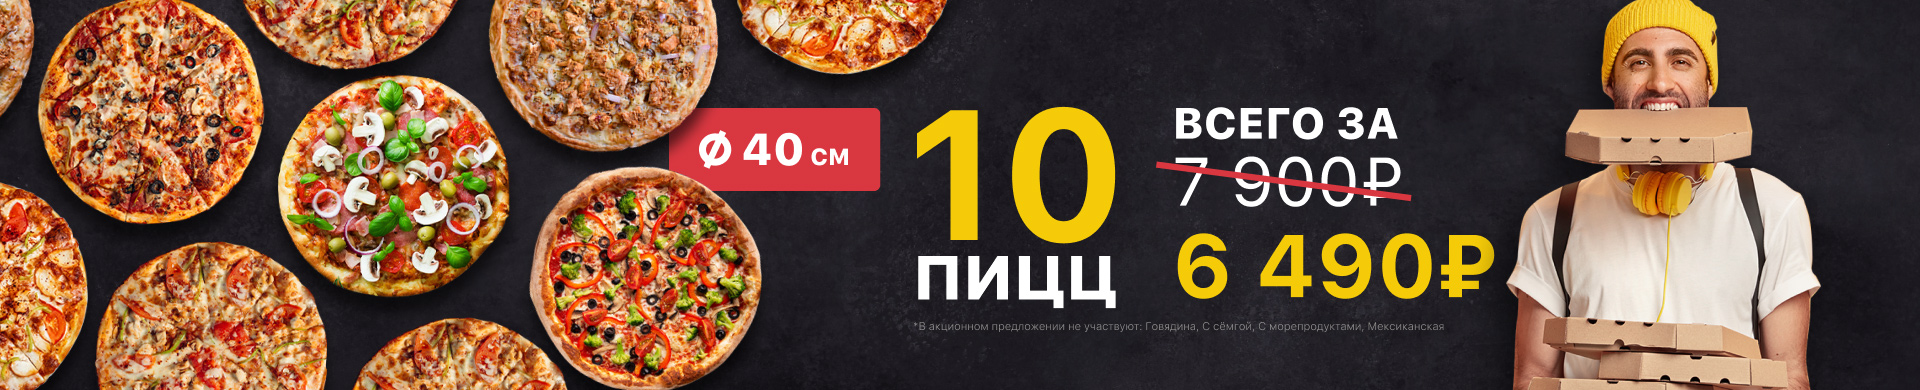 фото, акция можно купить 10 пицц за 6490 рублей